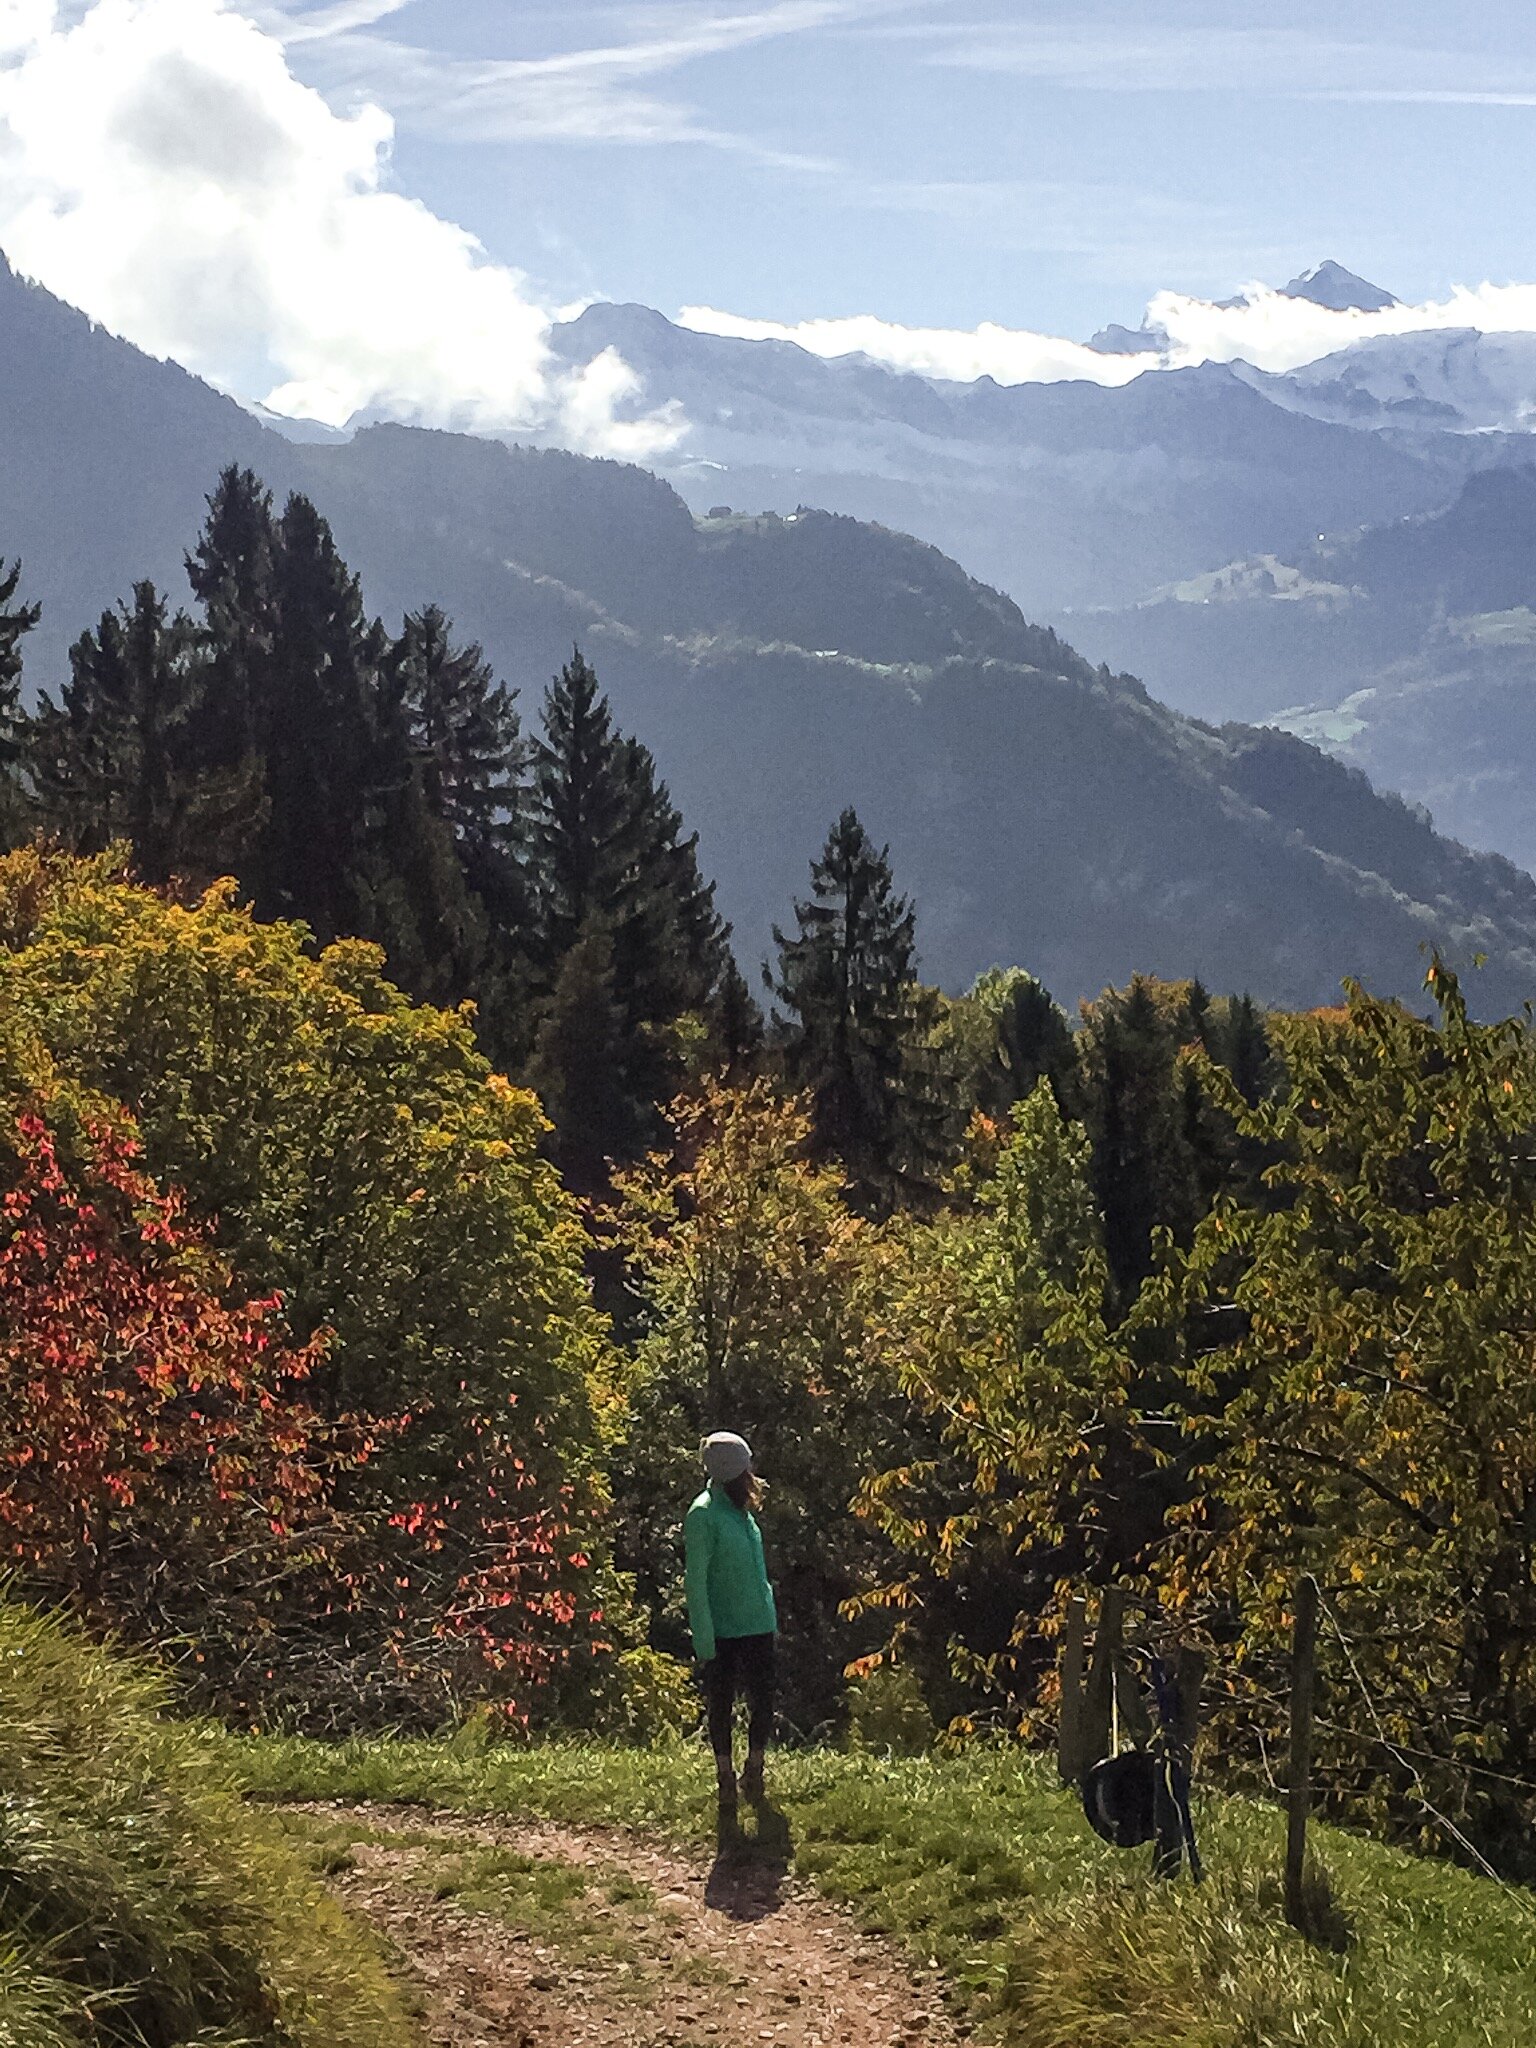 Fall colors on Mt. Rigi near Lucern, Switzerland